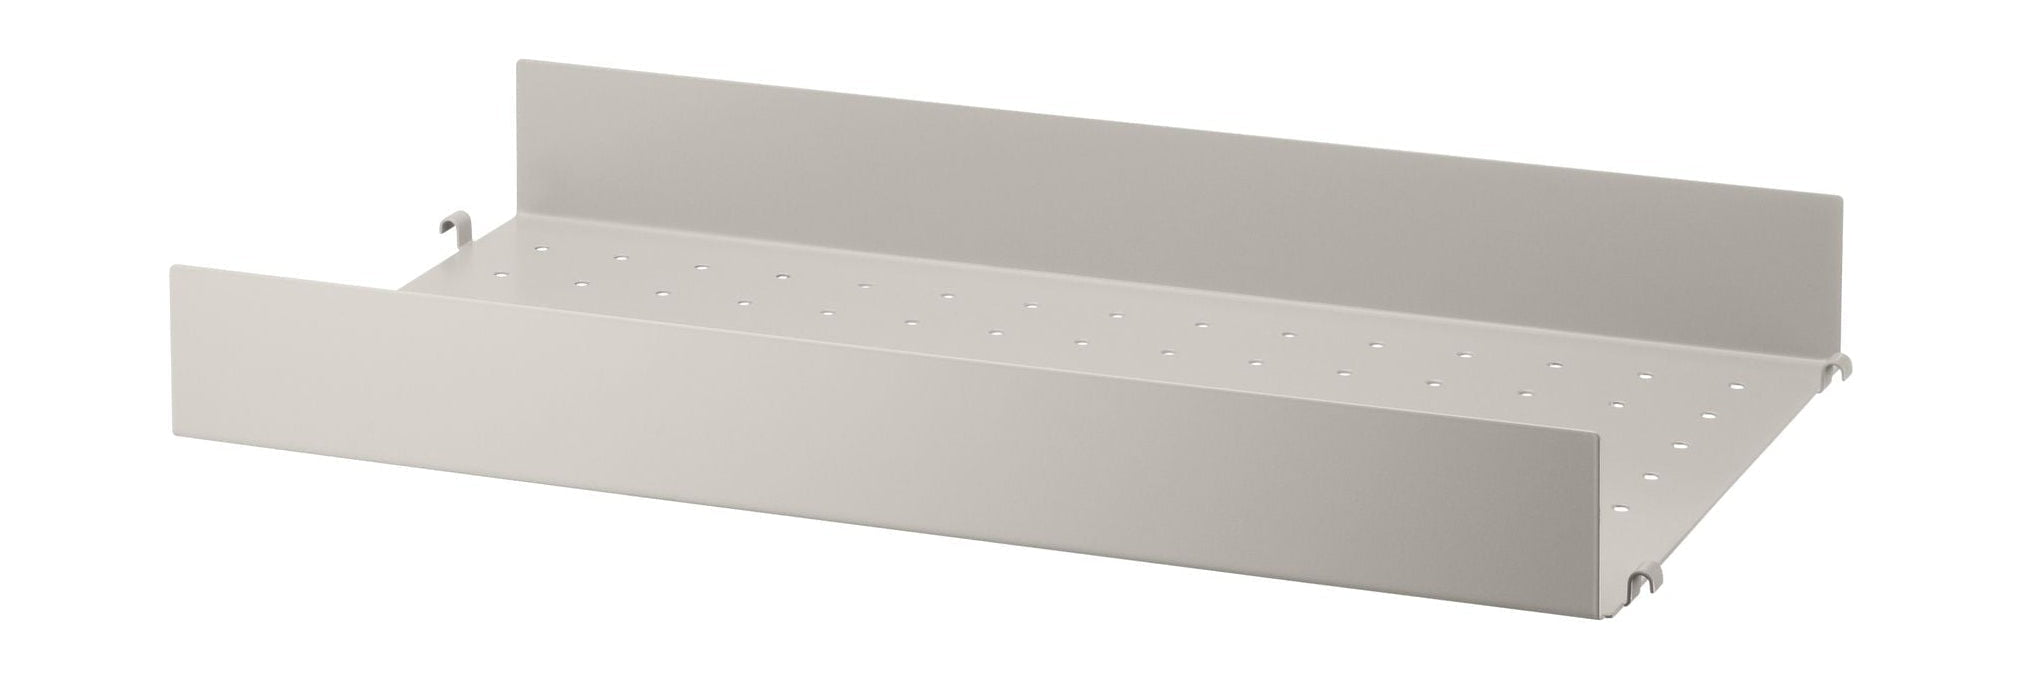 String Furniture String System Metal Plank met hoge rand 30x58 cm, beige